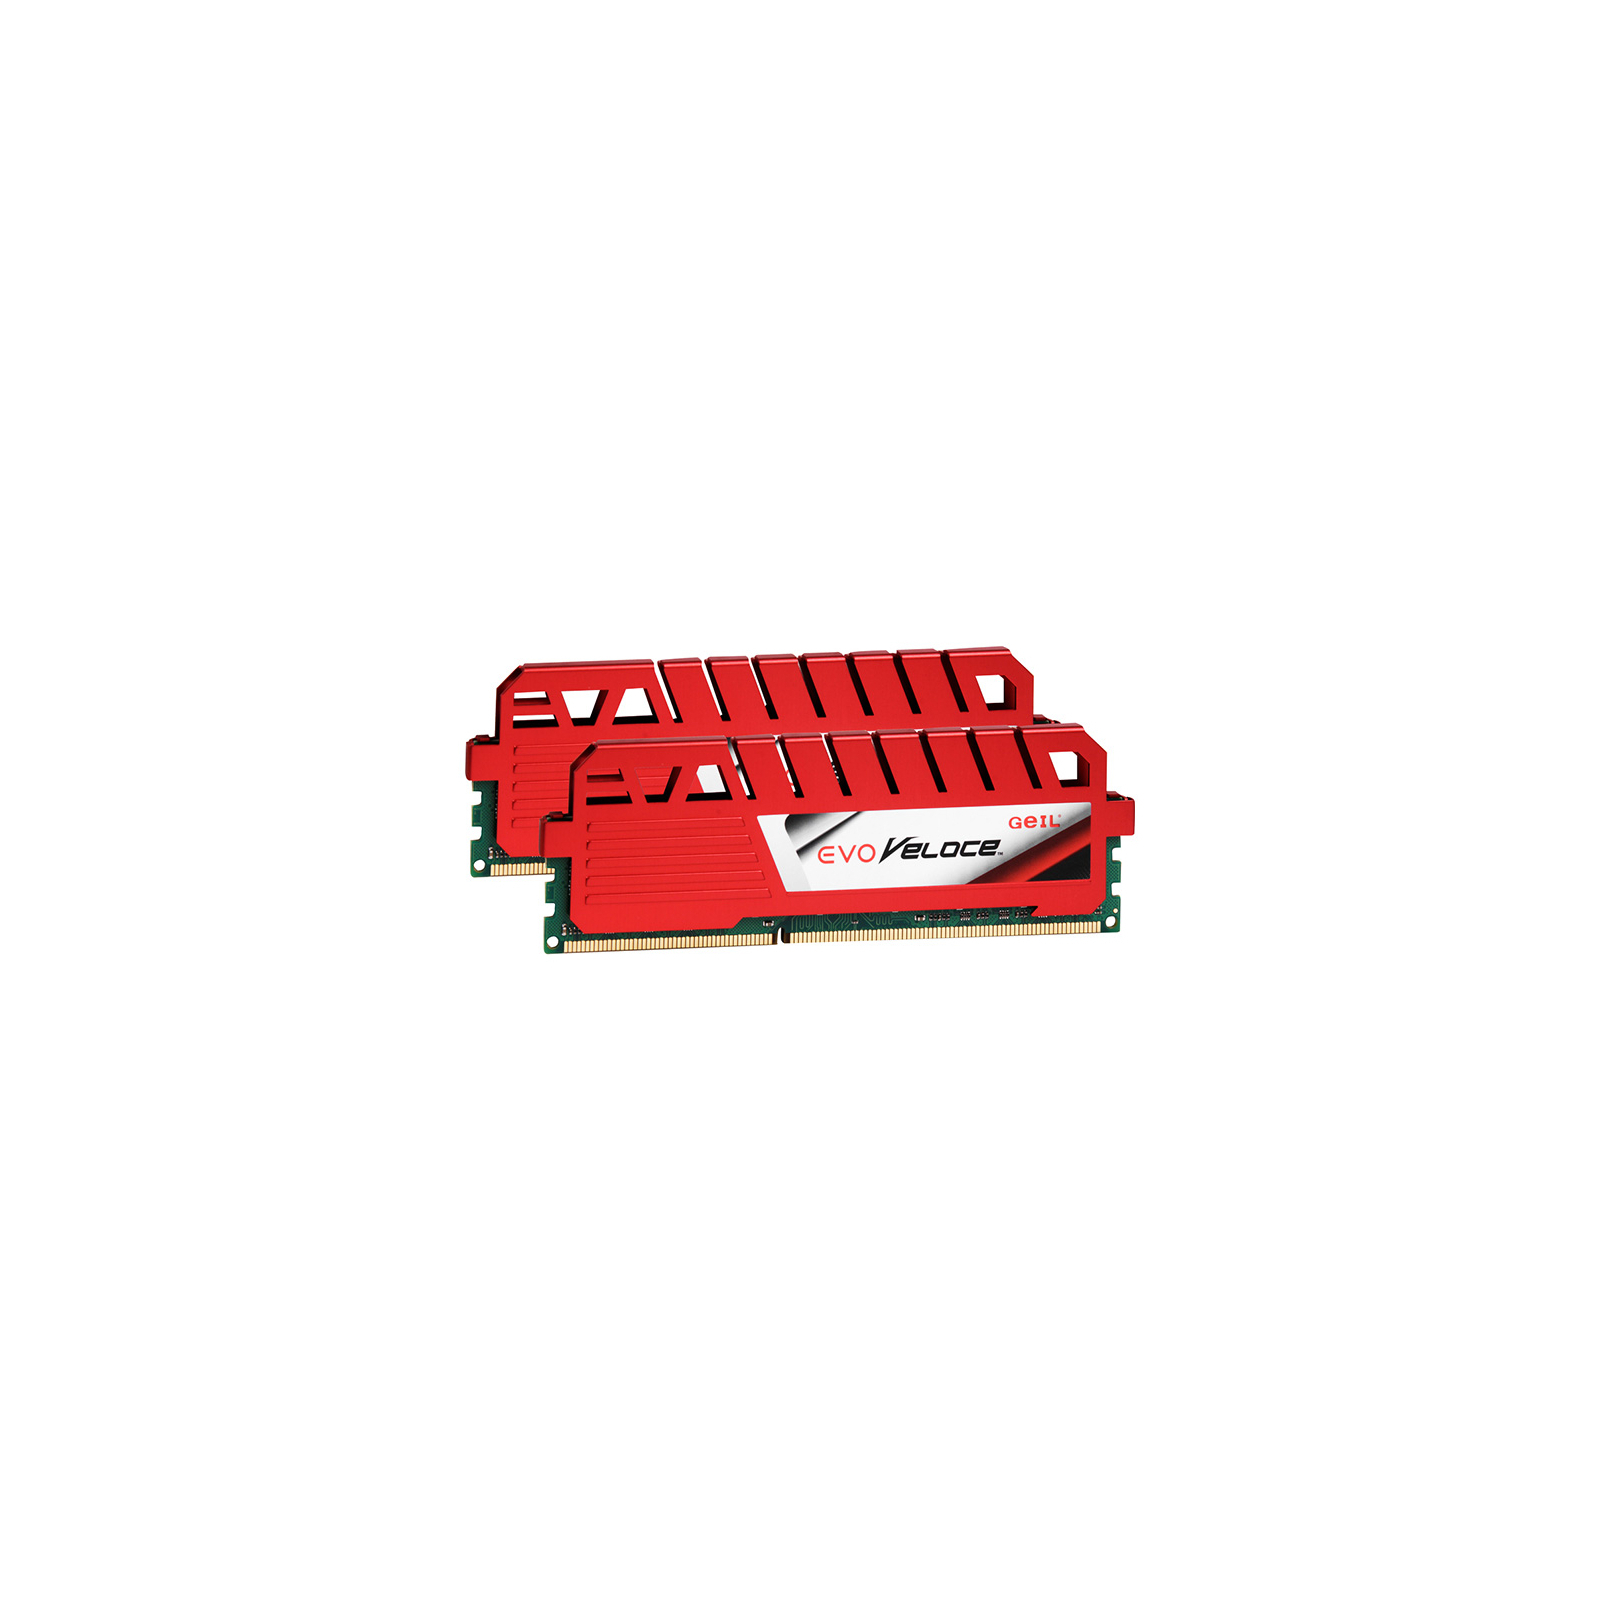 Модуль памяти для компьютера DDR3 16GB (2x8GB) 1600 MHz VELOCE Heatsink Geil (GEV316GB1600C11DC) изображение 2